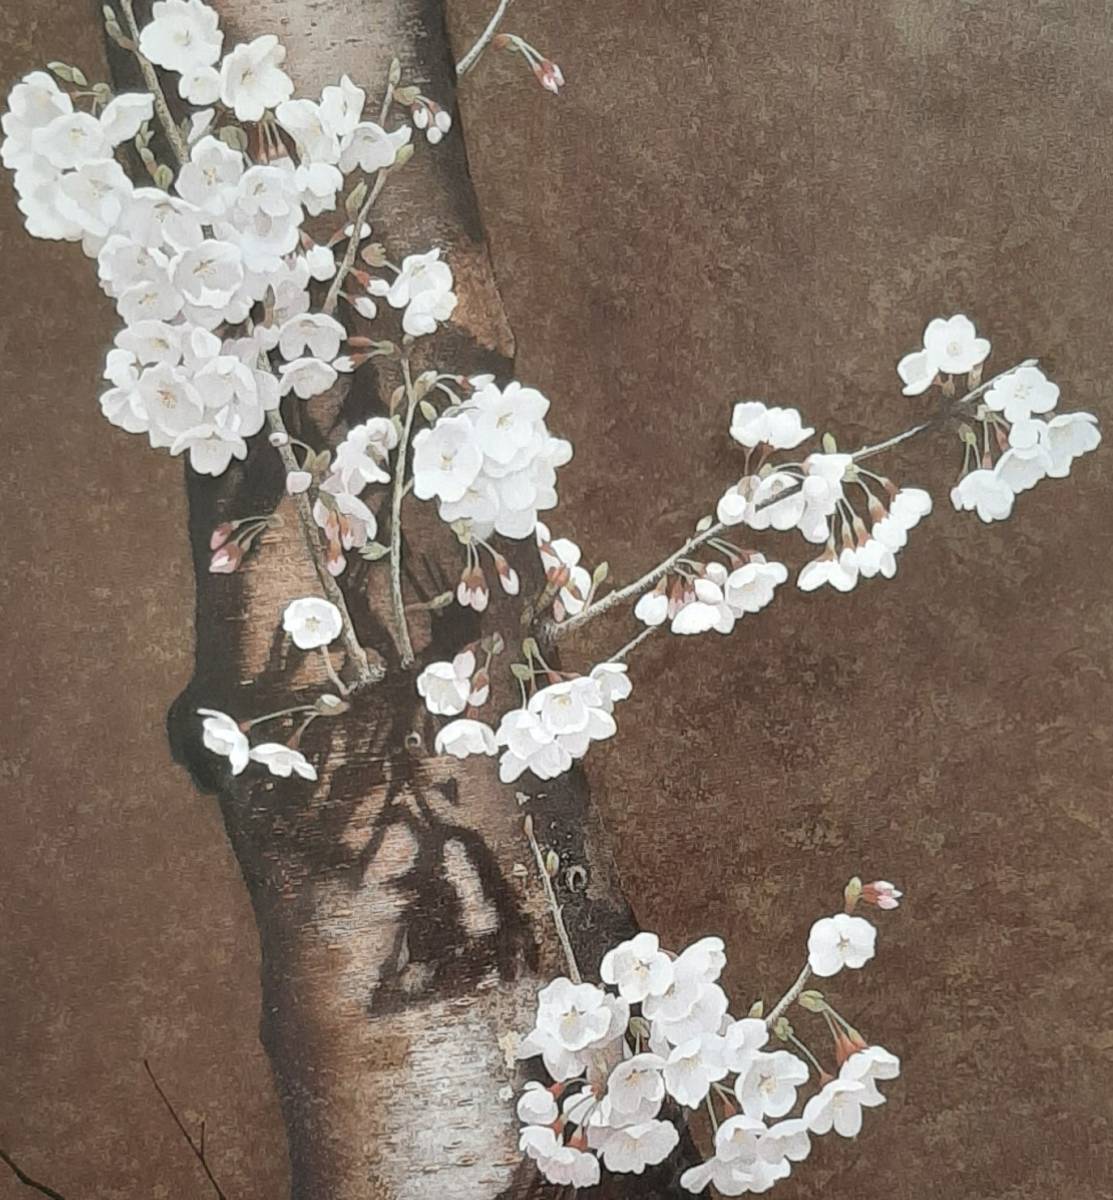  river . beautiful .,[ Sakura flower ], rare book of paintings in print. frame ., four season, scenery, popular work, order mat attaching * made in Japan new goods amount entering, free shipping 